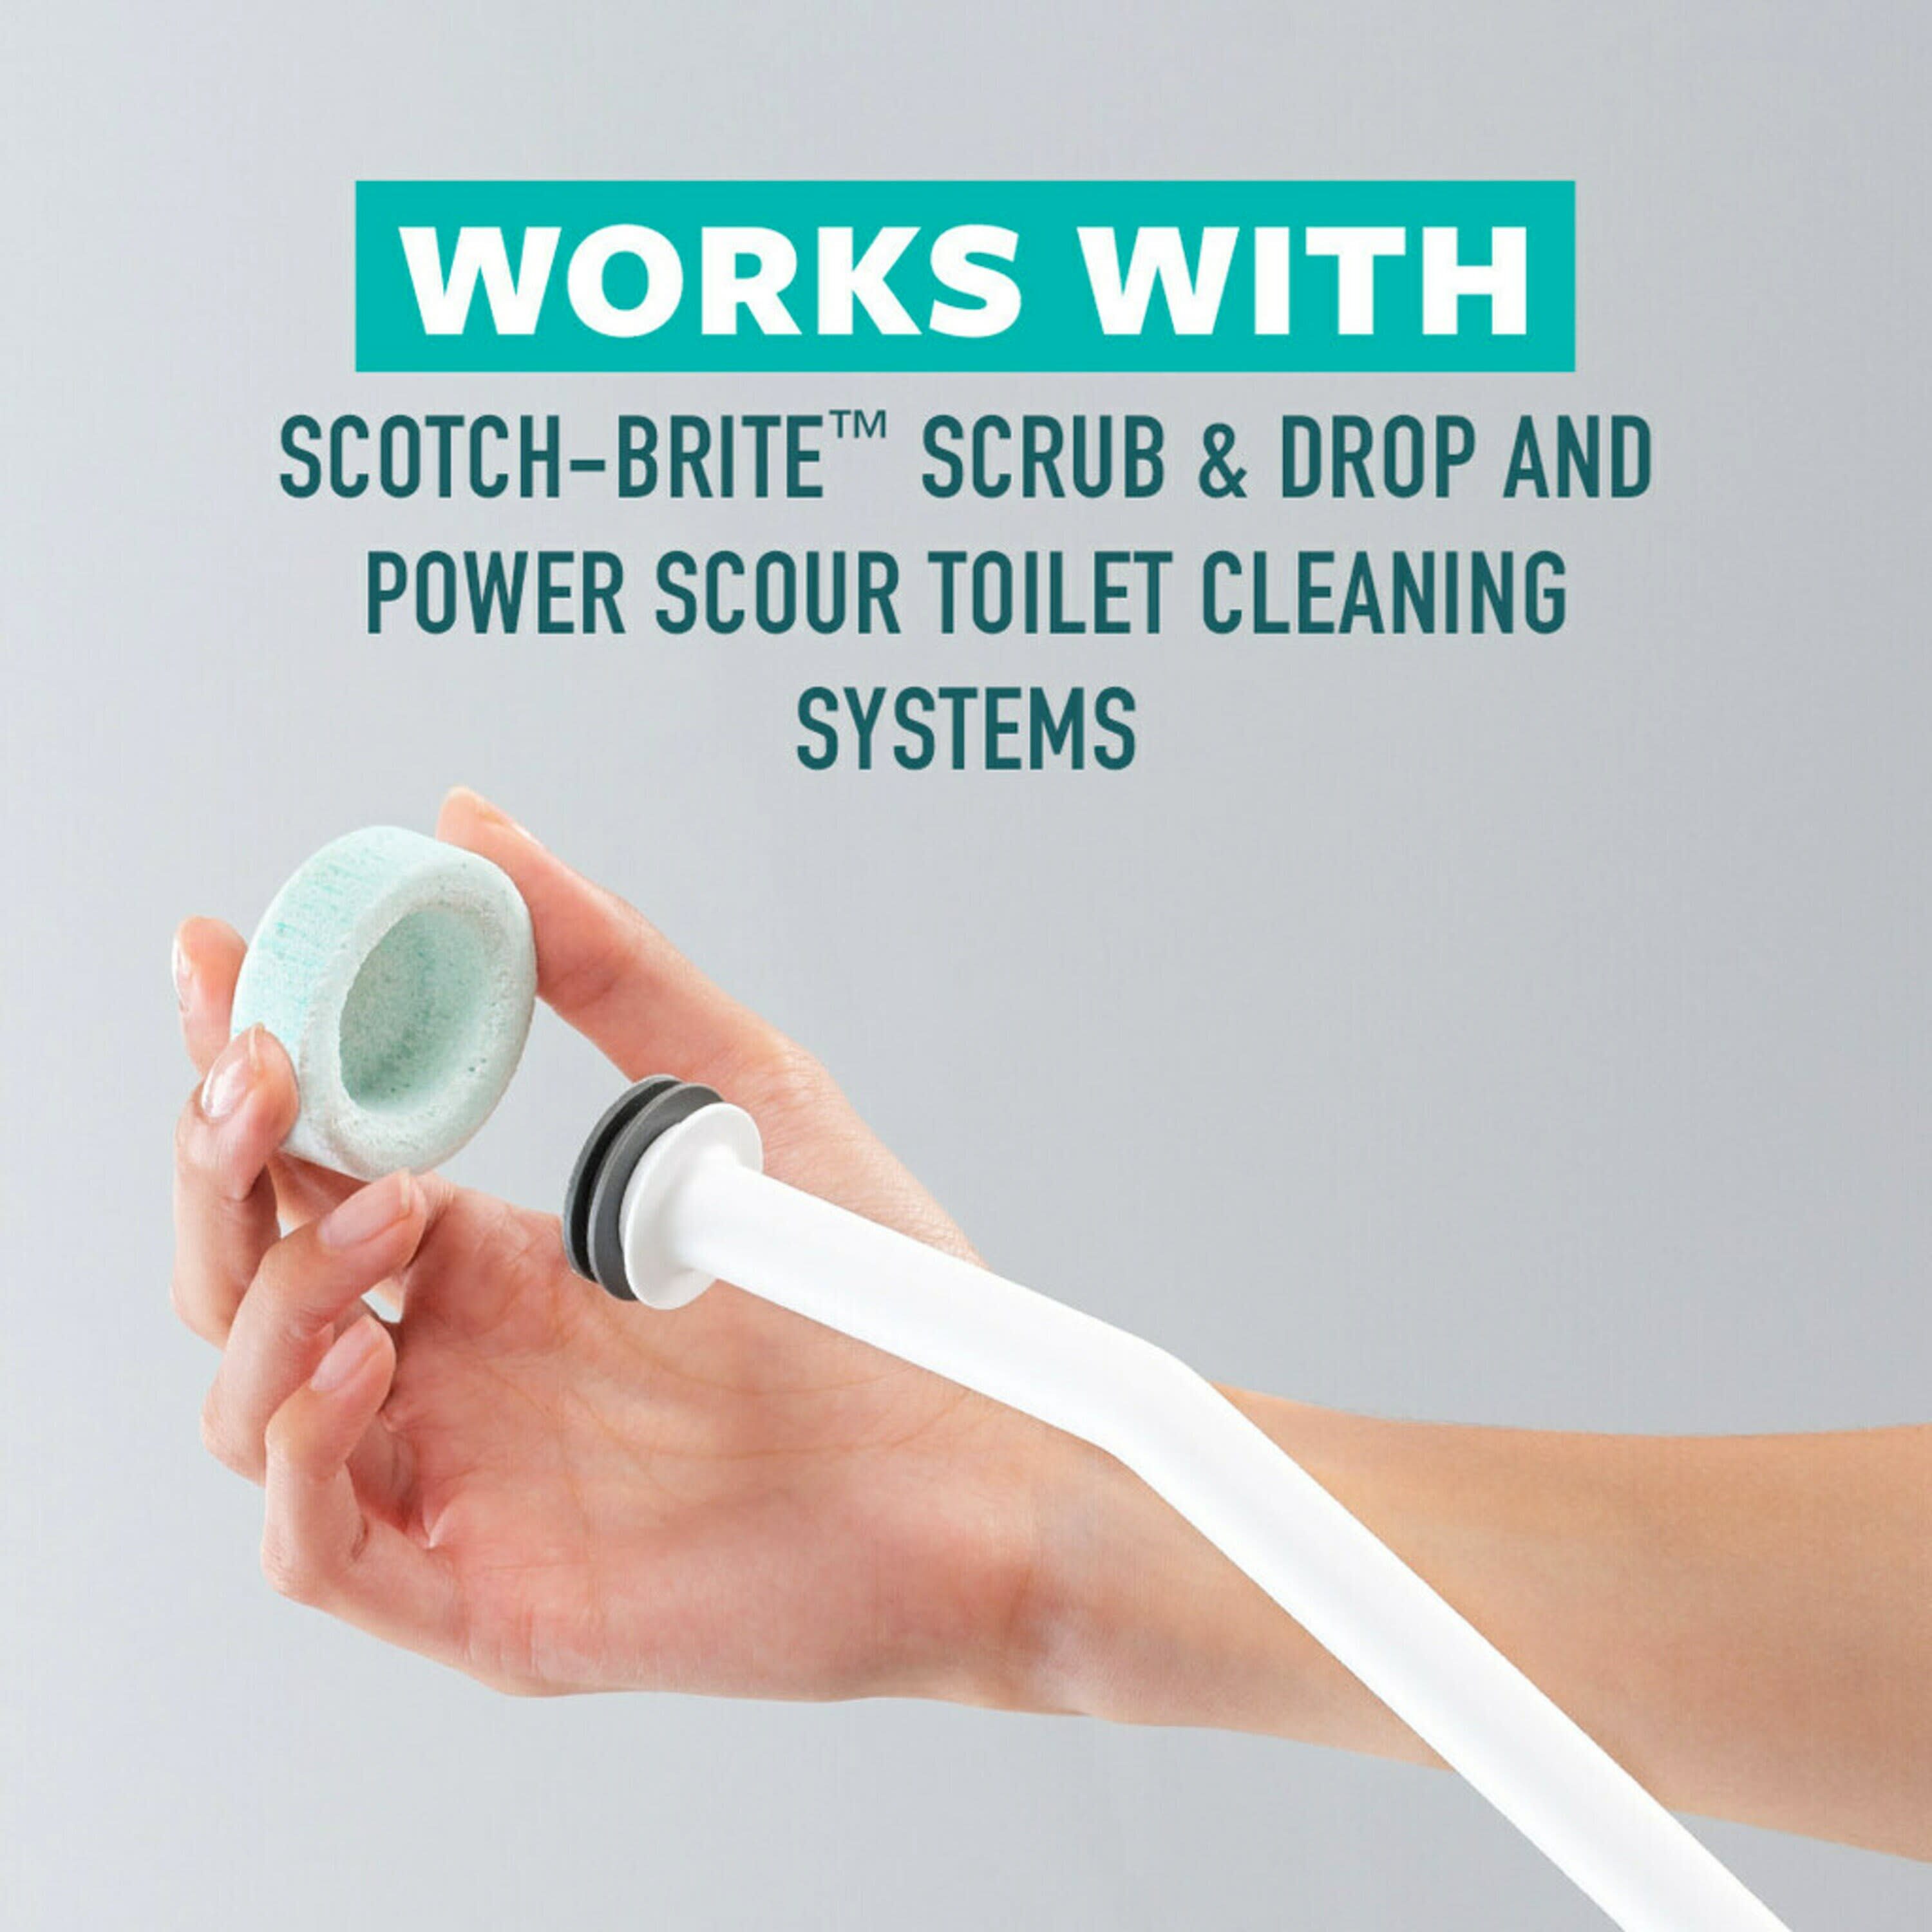 Scotch Brite Toilet Scrubber Starter Kit, Cleaning